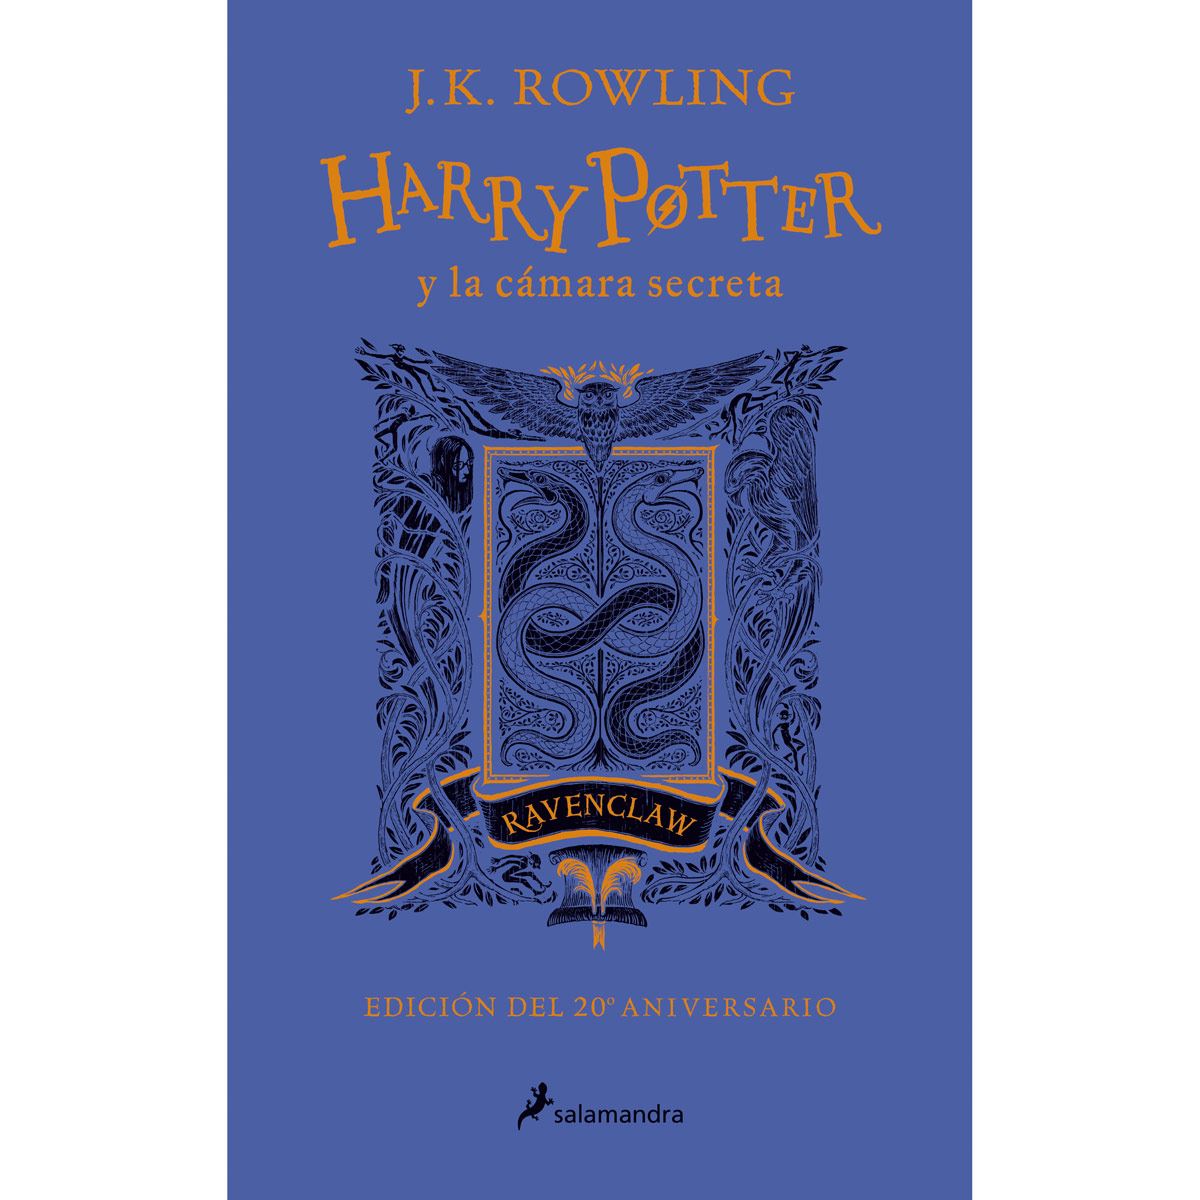 Harry Potter 2 y la cámara secreta Ravenclaw